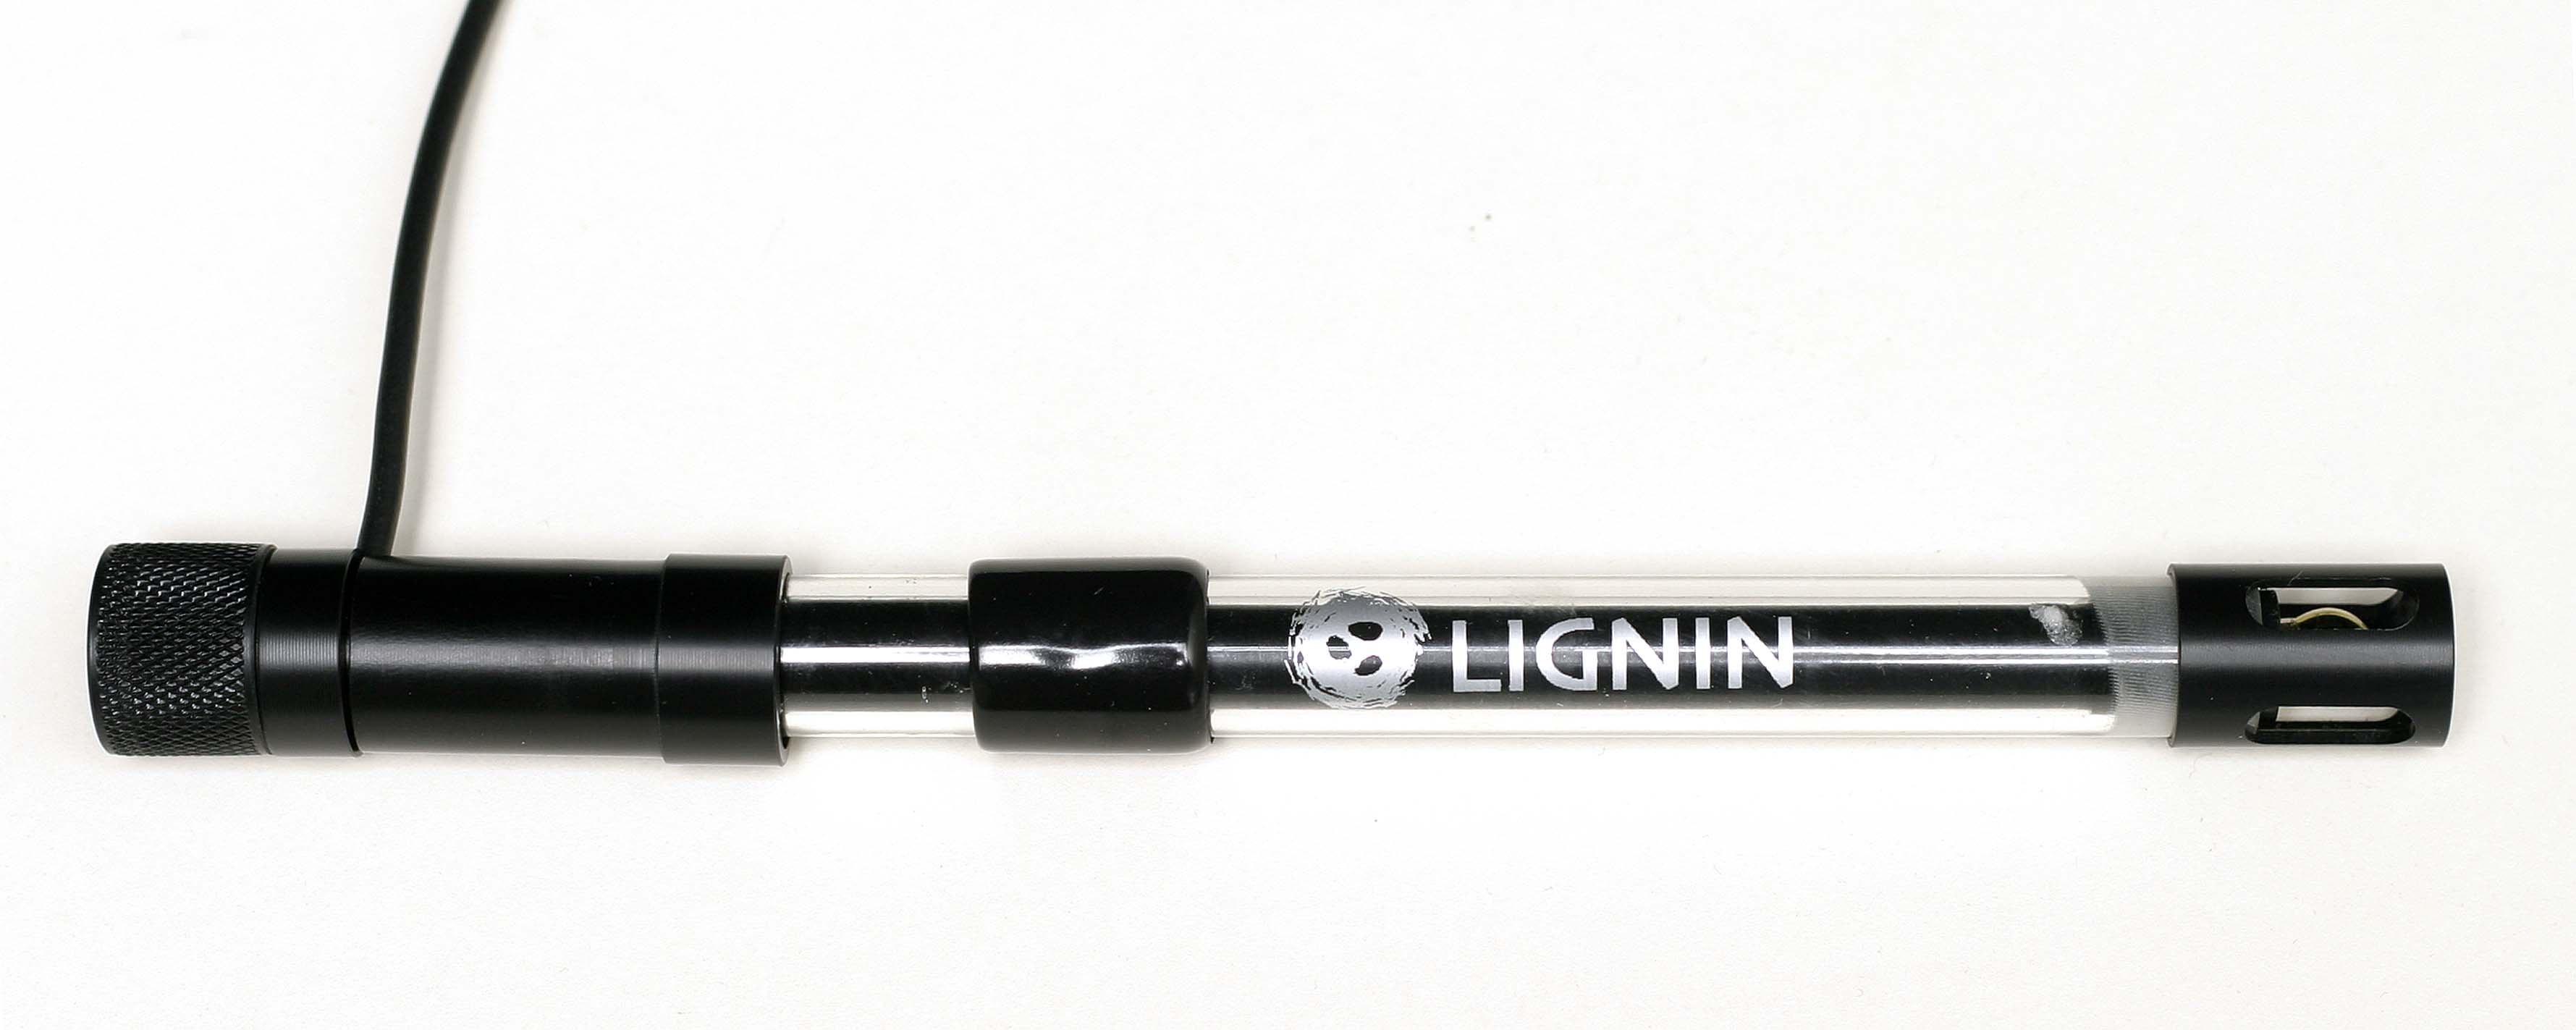 One of LIGNIN's pH Electrodes